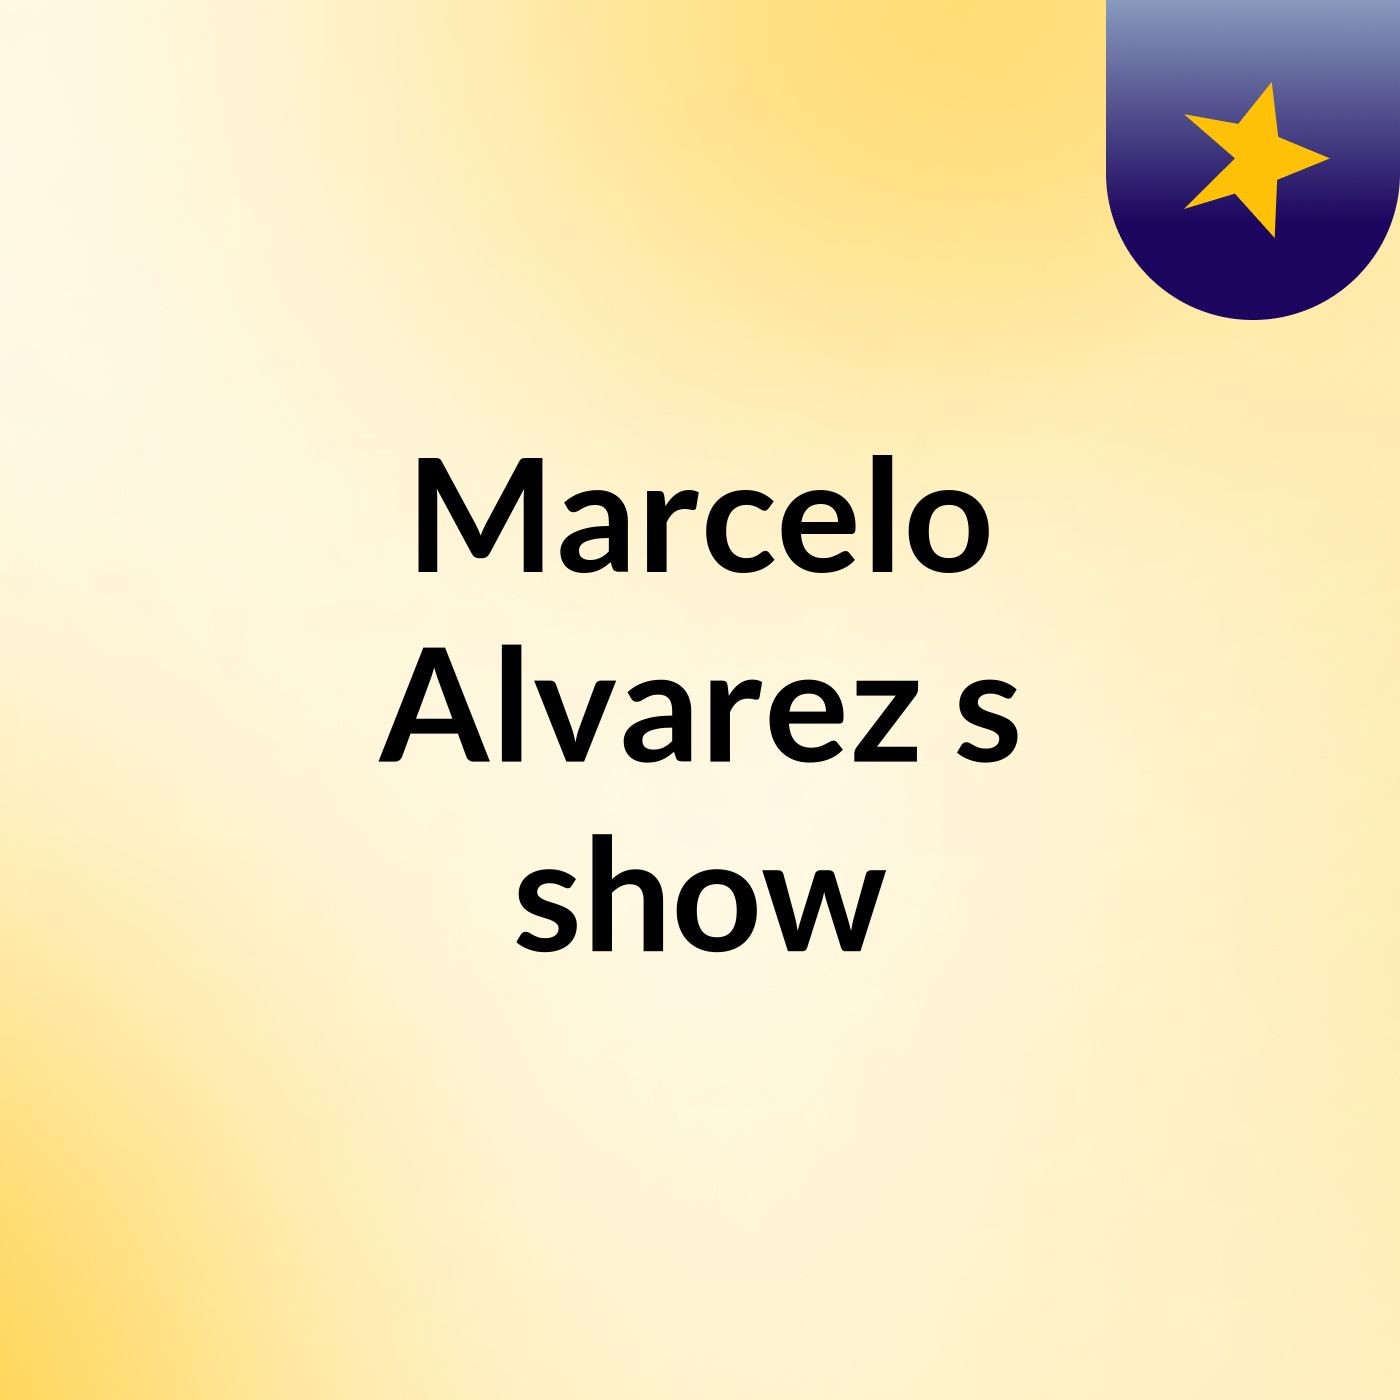 Marcelo Alvarez's show